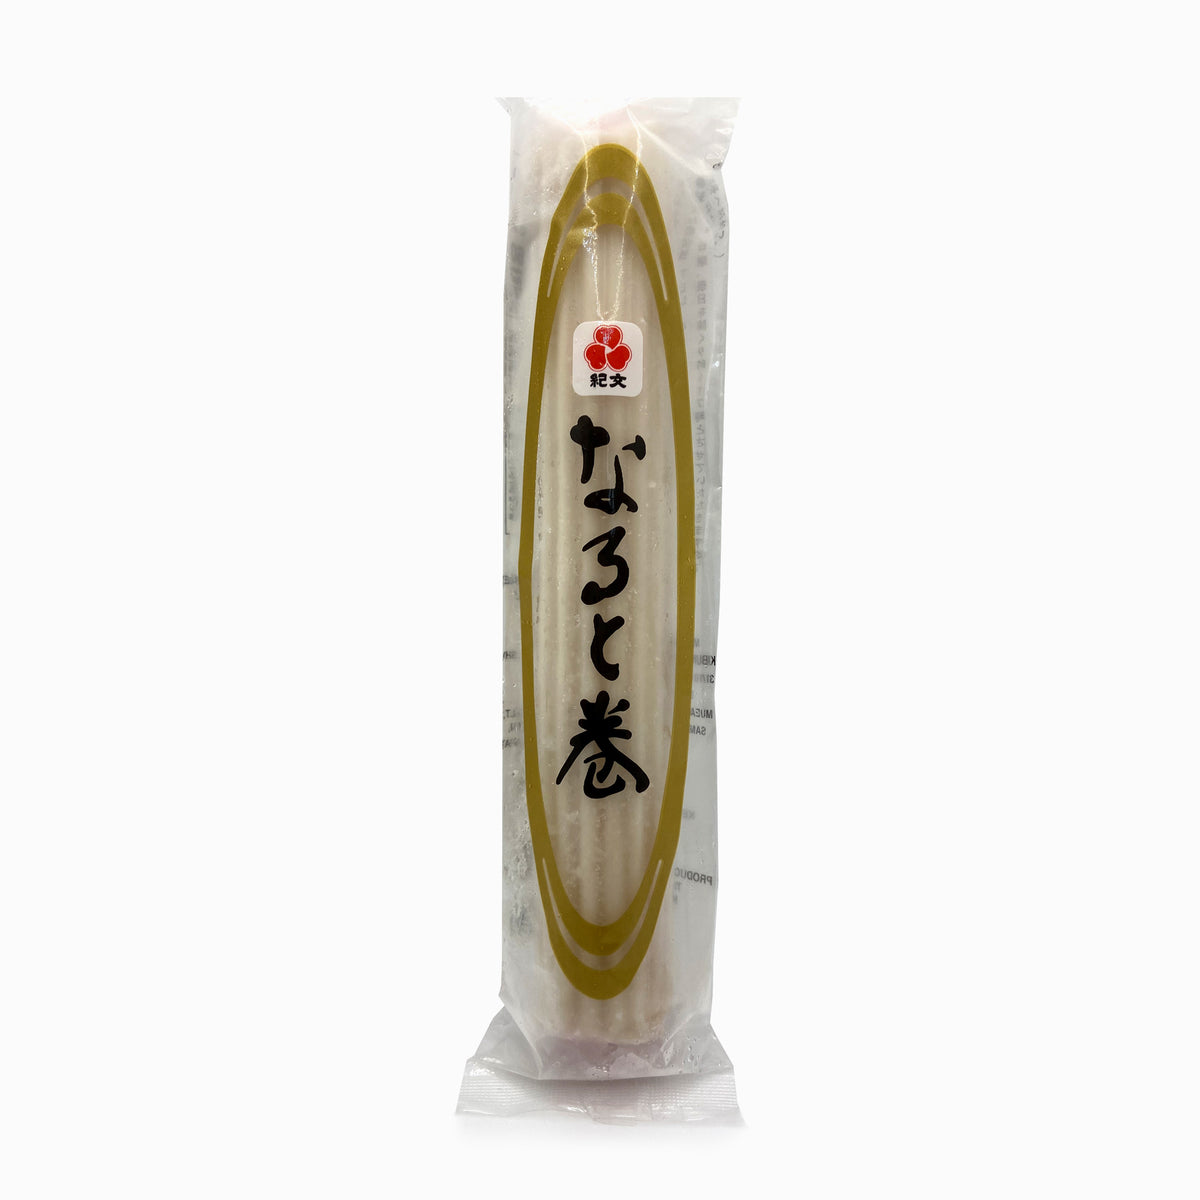 Comprar ONLINE Naruto maki pasta de pescado 160g